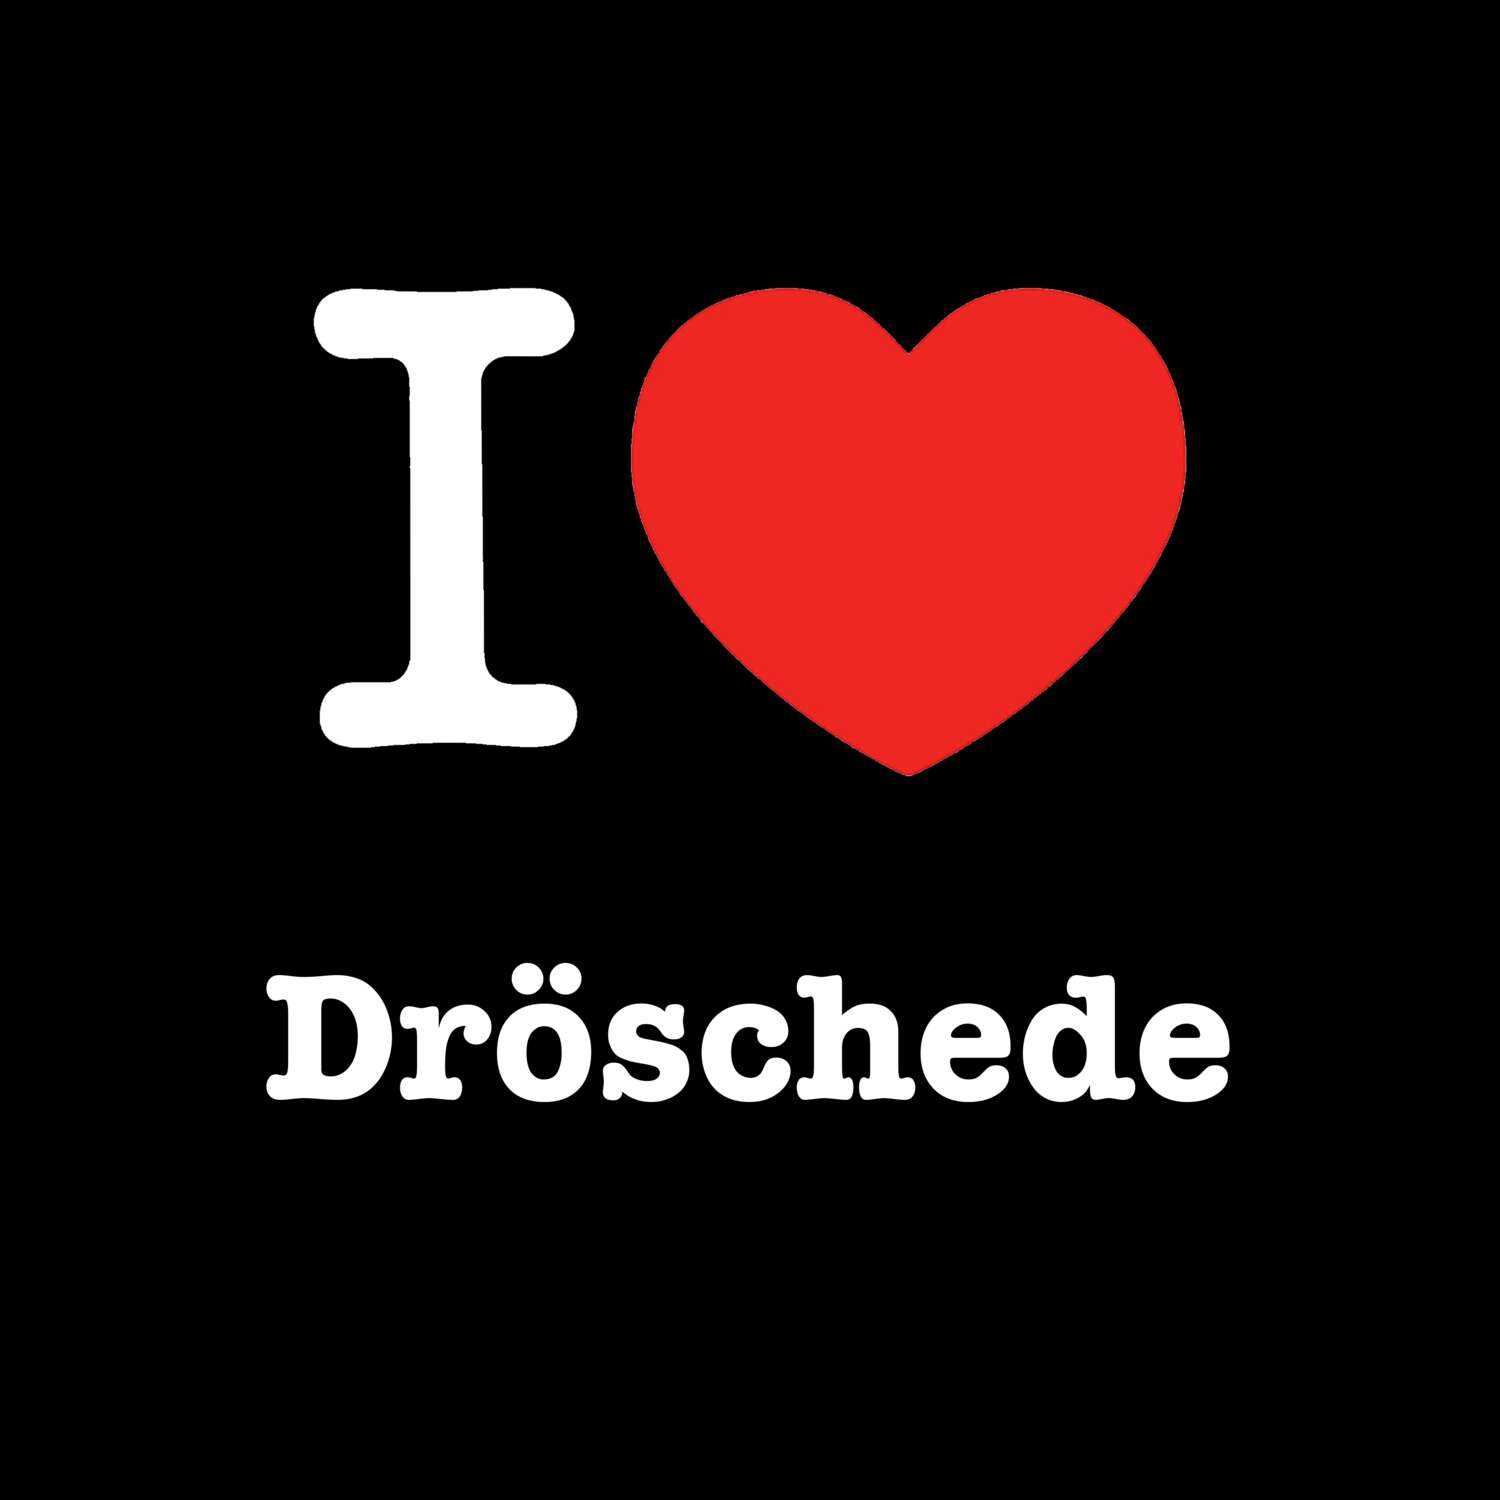 Dröschede T-Shirt »I love«